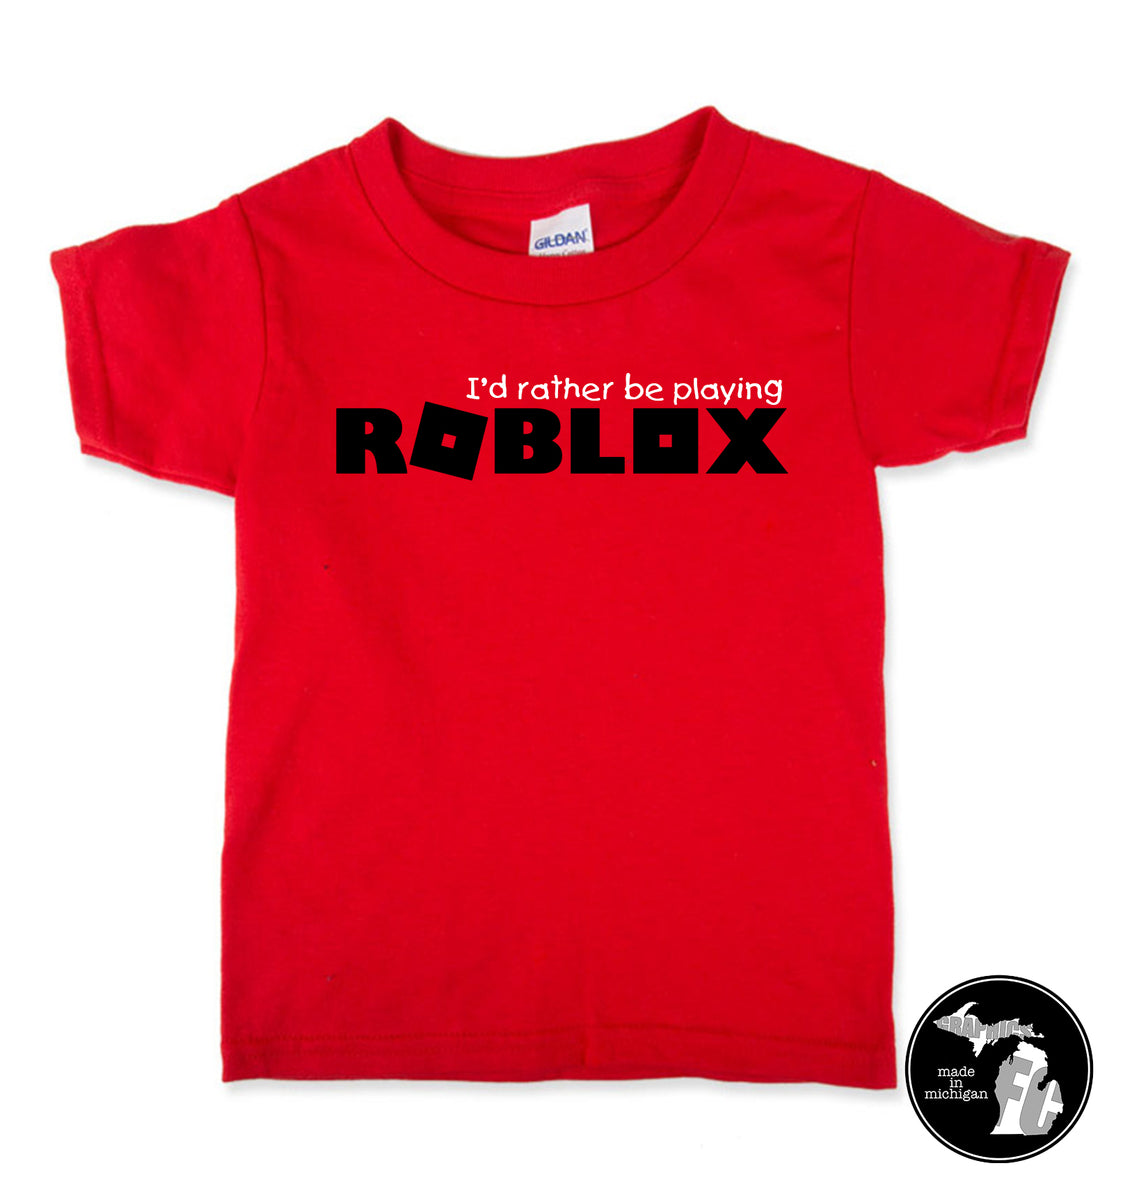 Most Expensive Roblox Shirt Template Rblx Gg Sigh Up - roblox custom shirt template nils stucki kieferorthopade